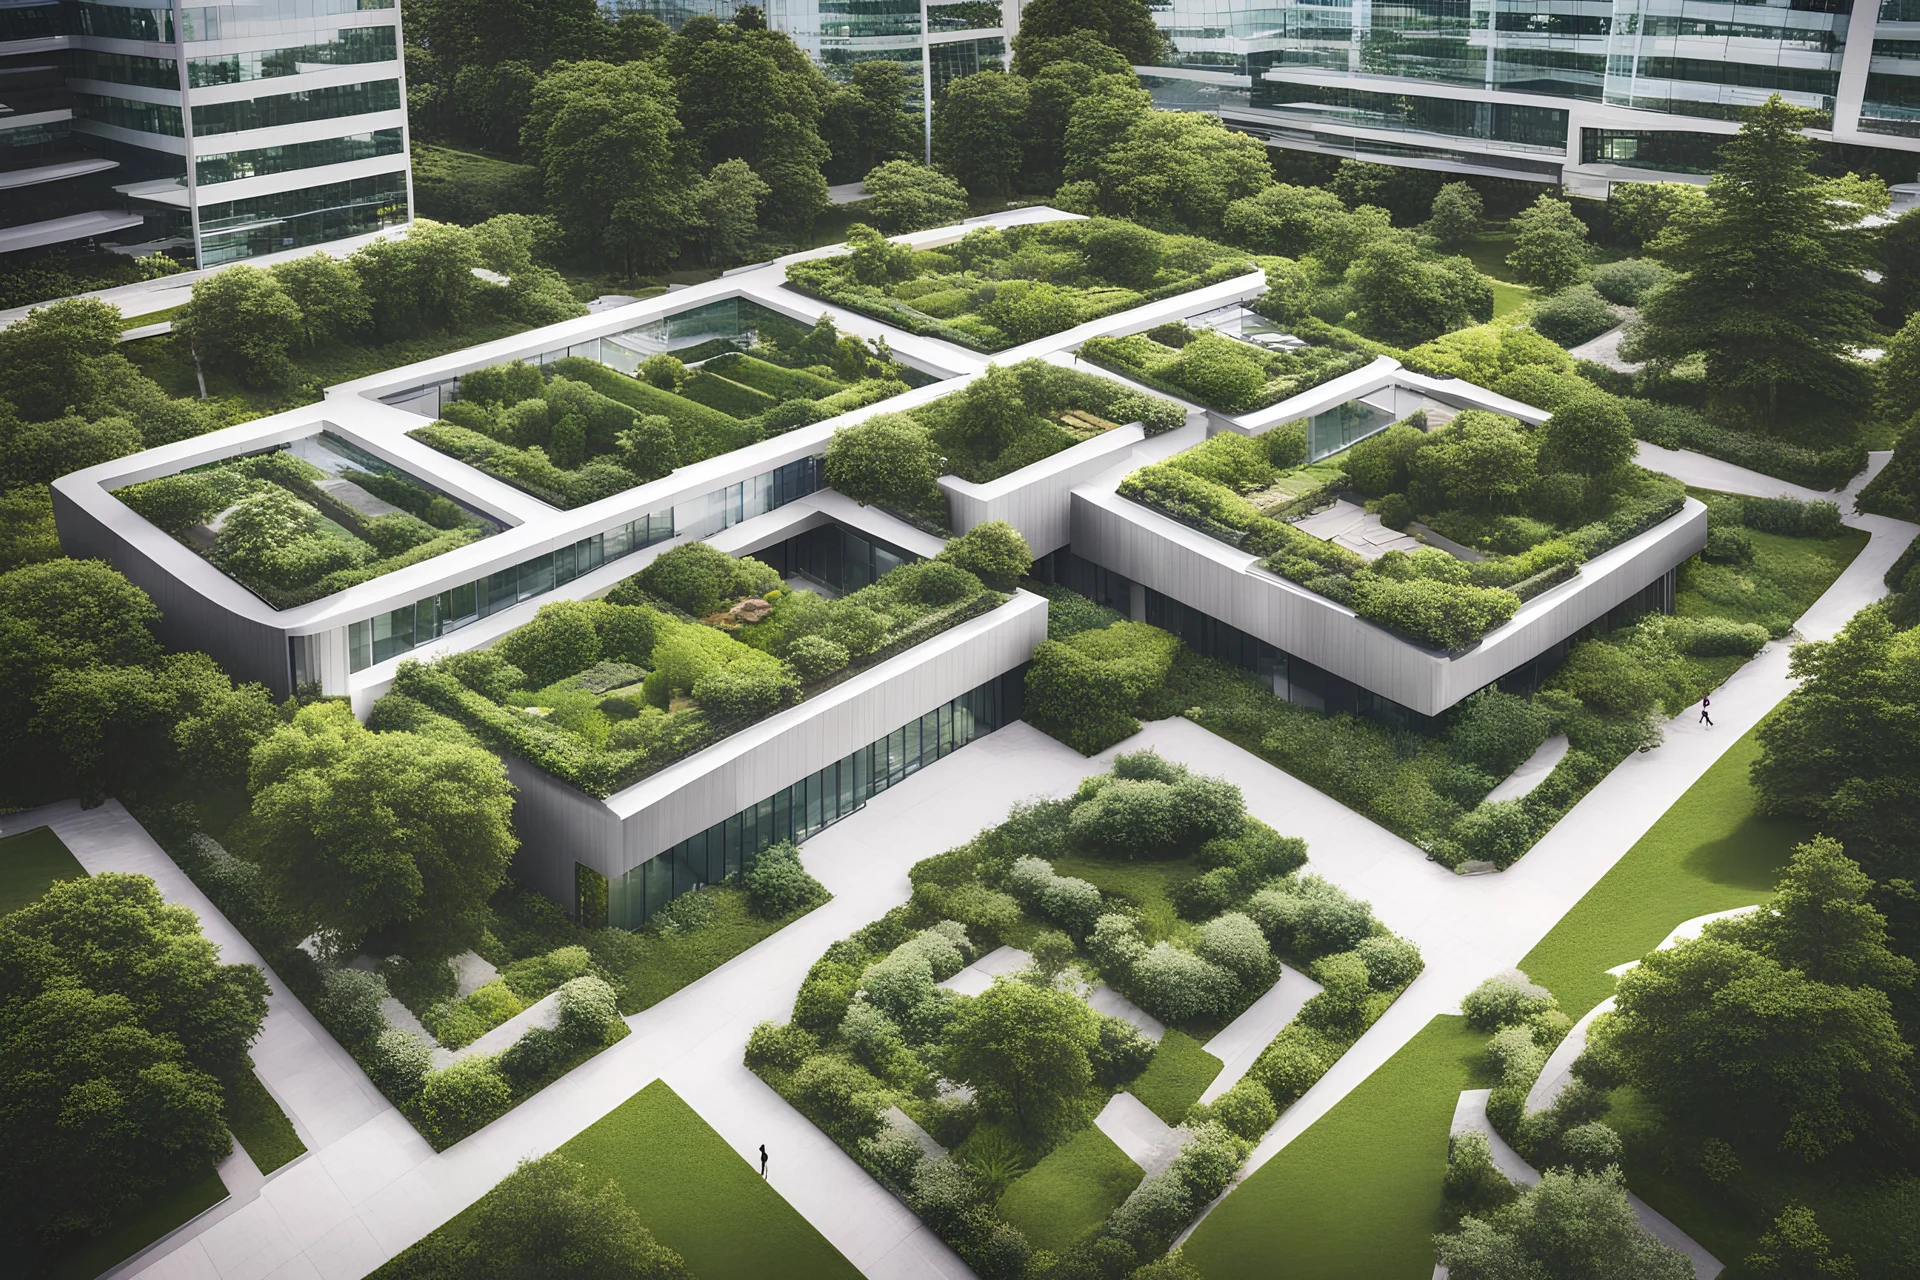 Edificios de oficinas modernos rodeados de jardines